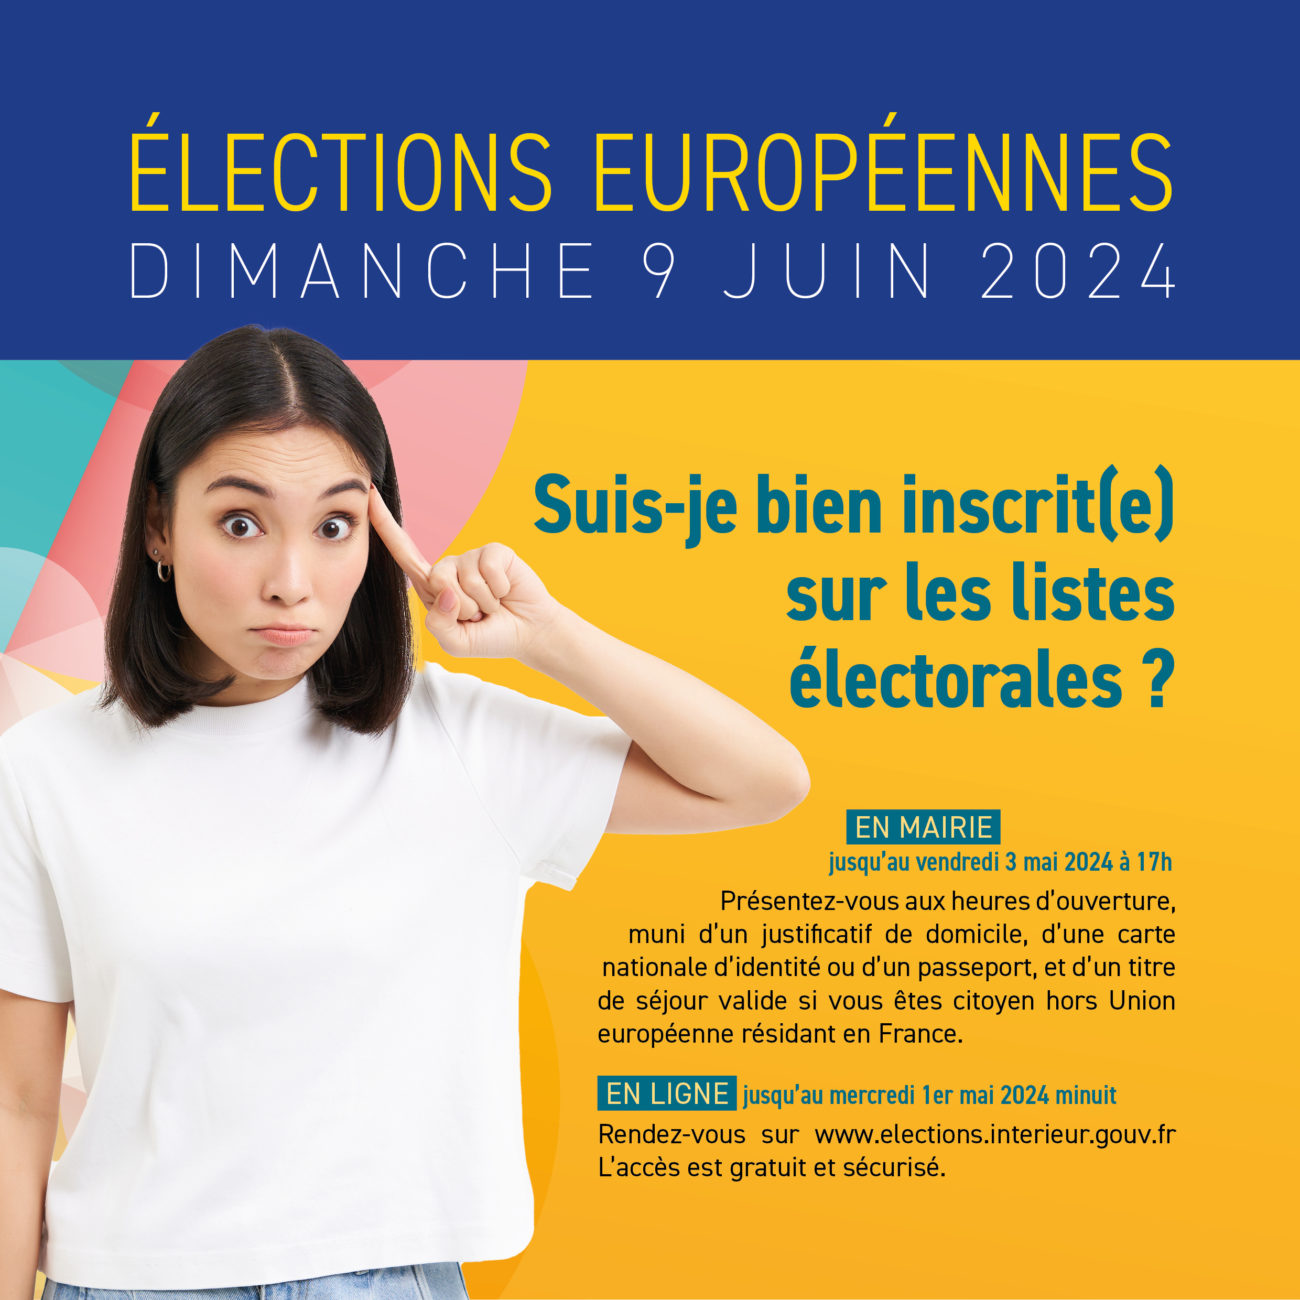 ELECTION-EUROPEENNES-LISTES-ELECTORALES-2024-1300x1300.jpg